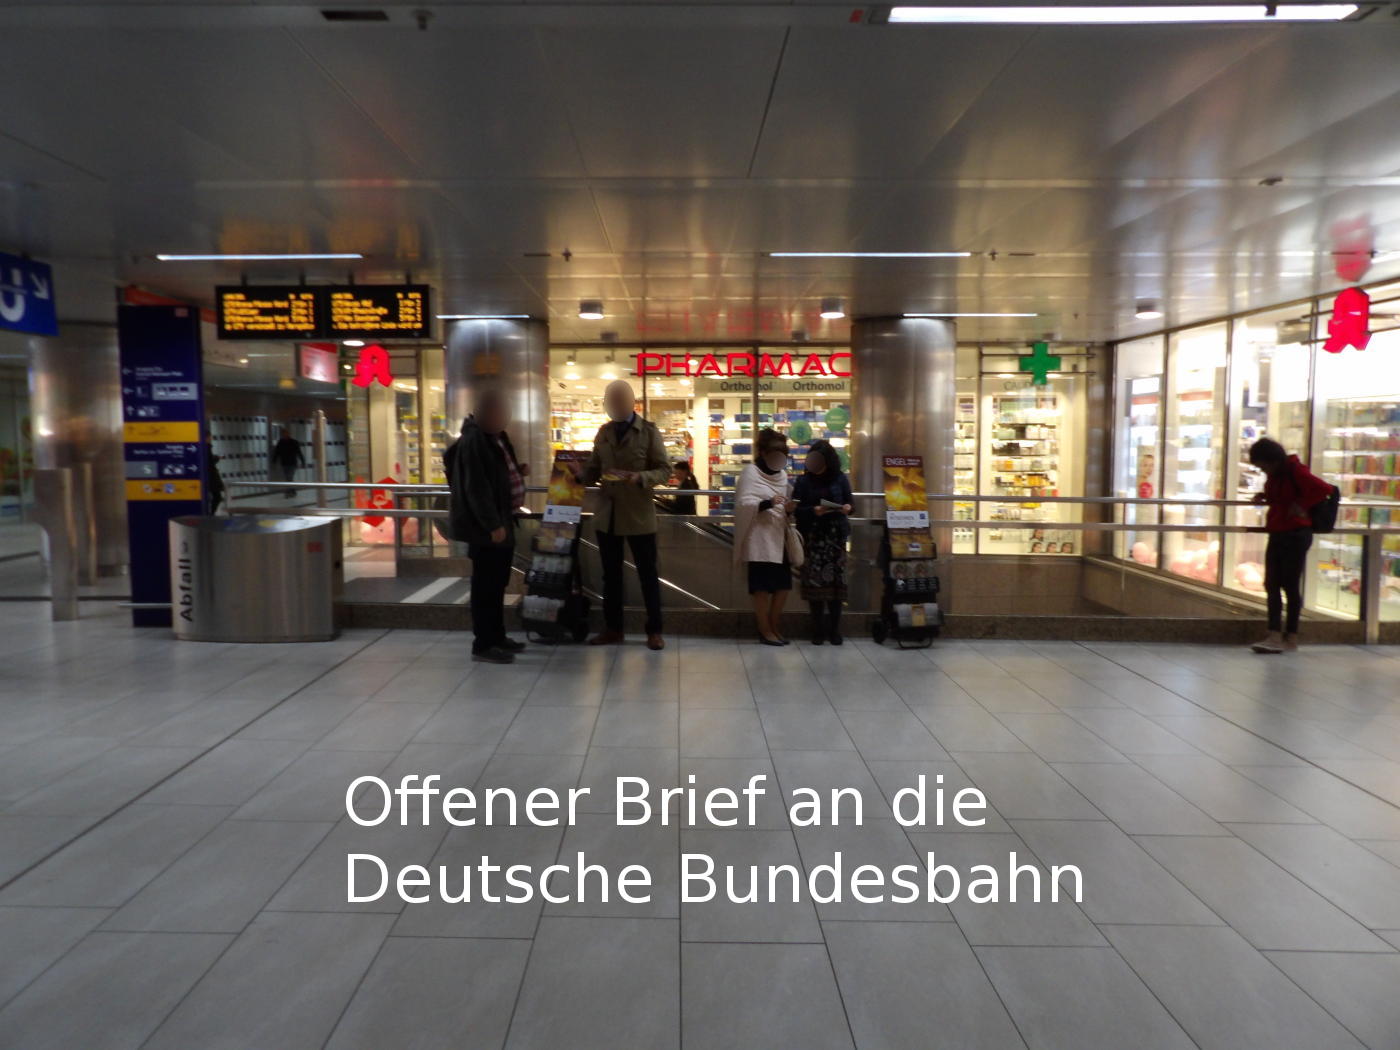 Deutsche Bundesbahn grants unique special rights to Watchtower Company